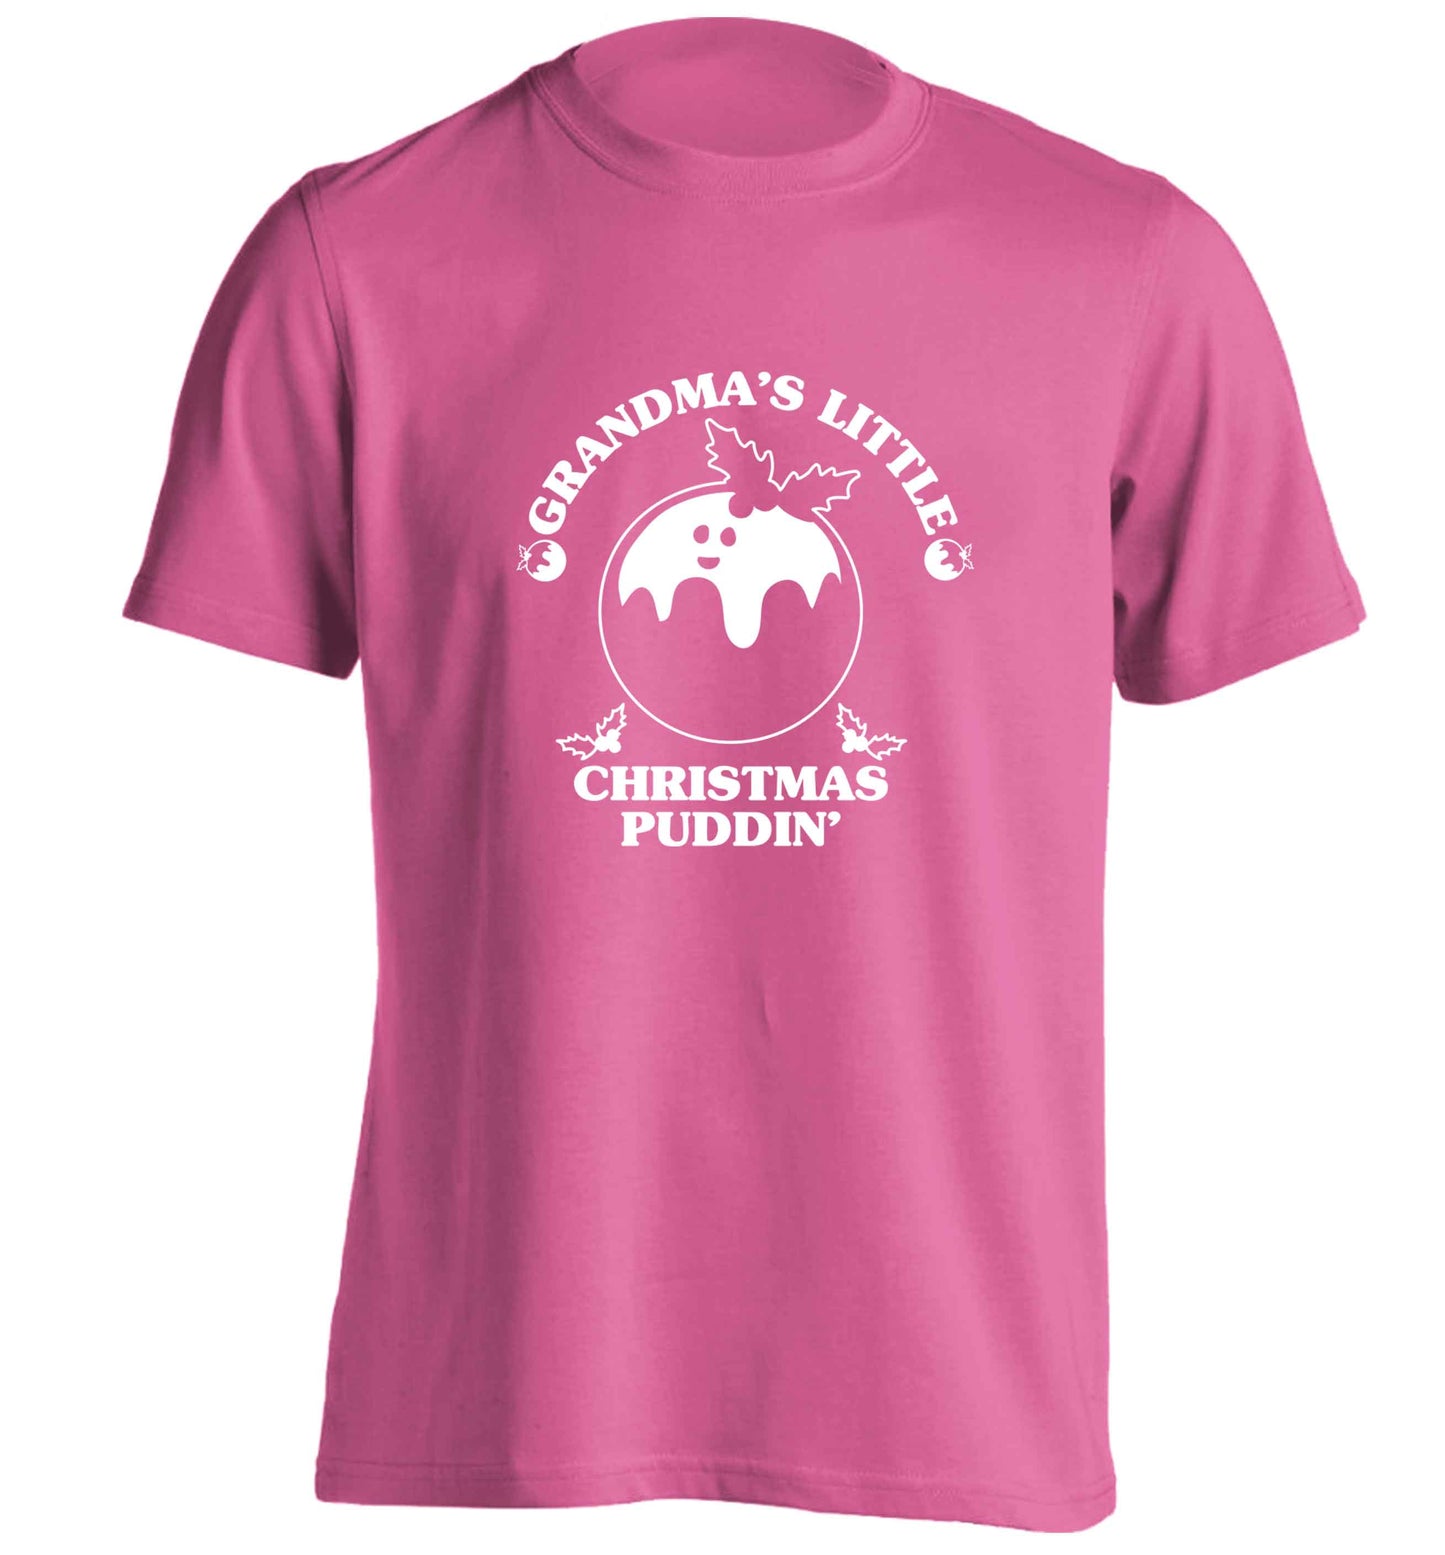 Grandma's little Christmas puddin' adults unisex pink Tshirt 2XL